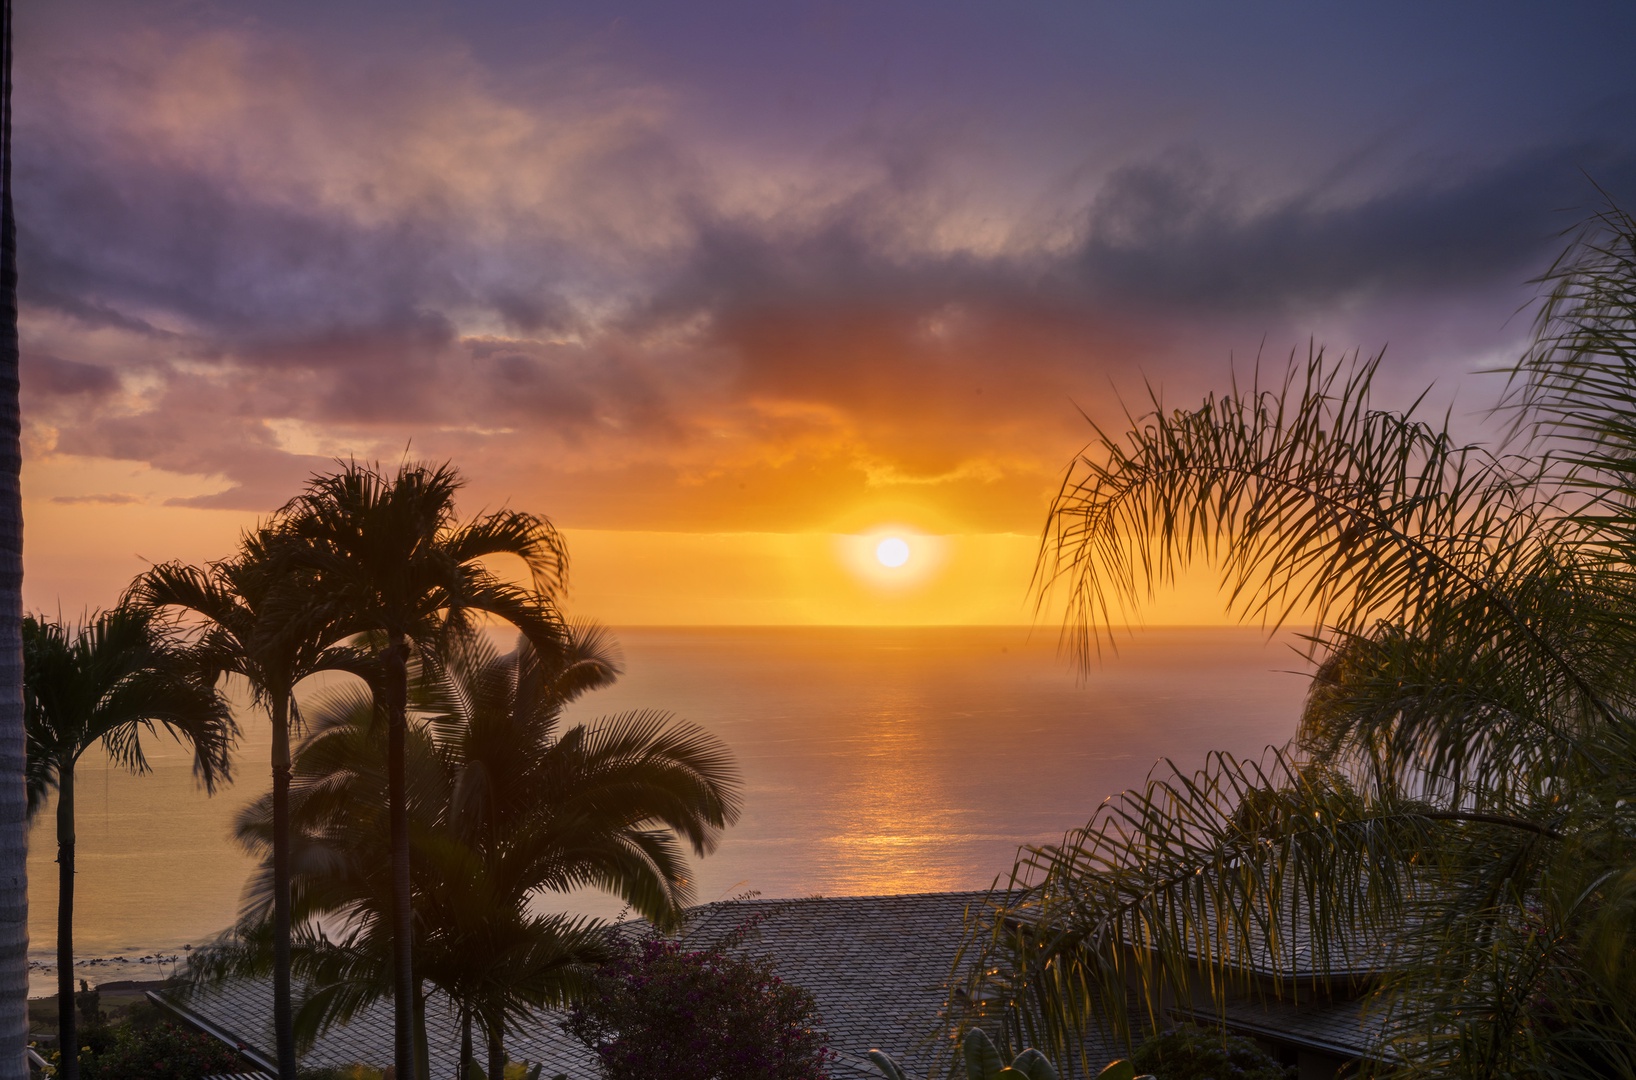 Kailua Kona Vacation Rentals, Pineapple House - Sun setting over the ocean at Pineapple House!